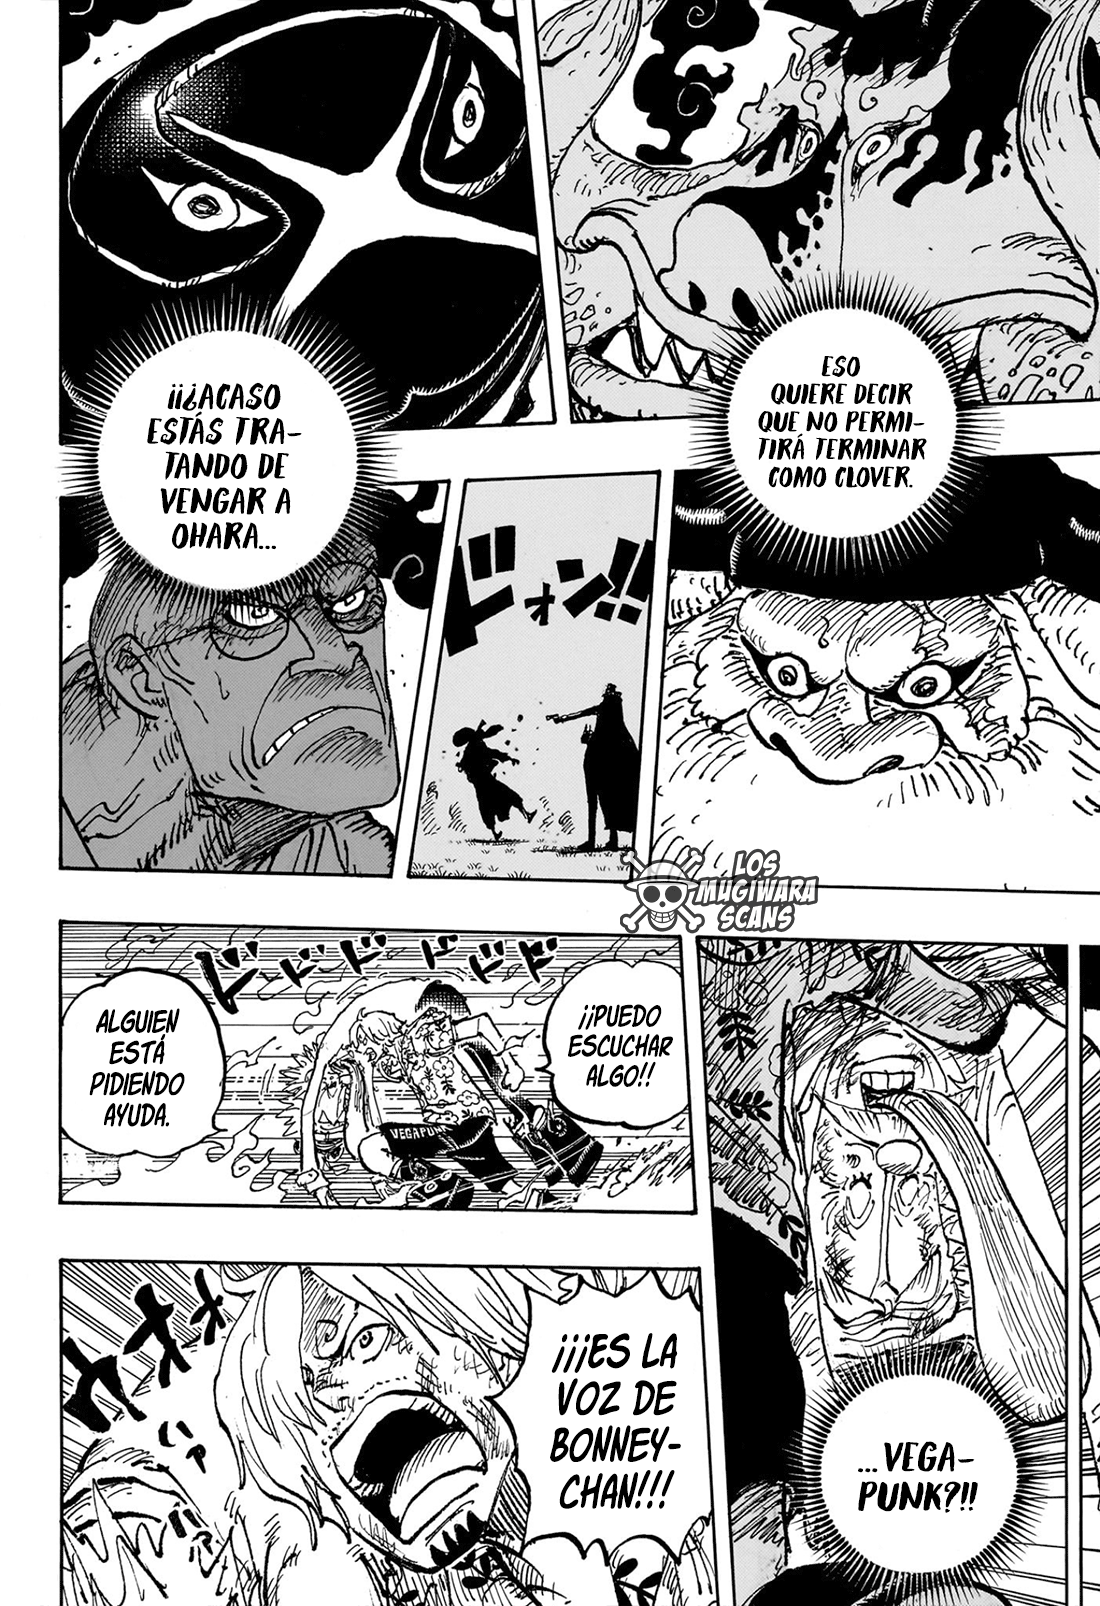 español - One Piece Manga 1113 [Español] 07